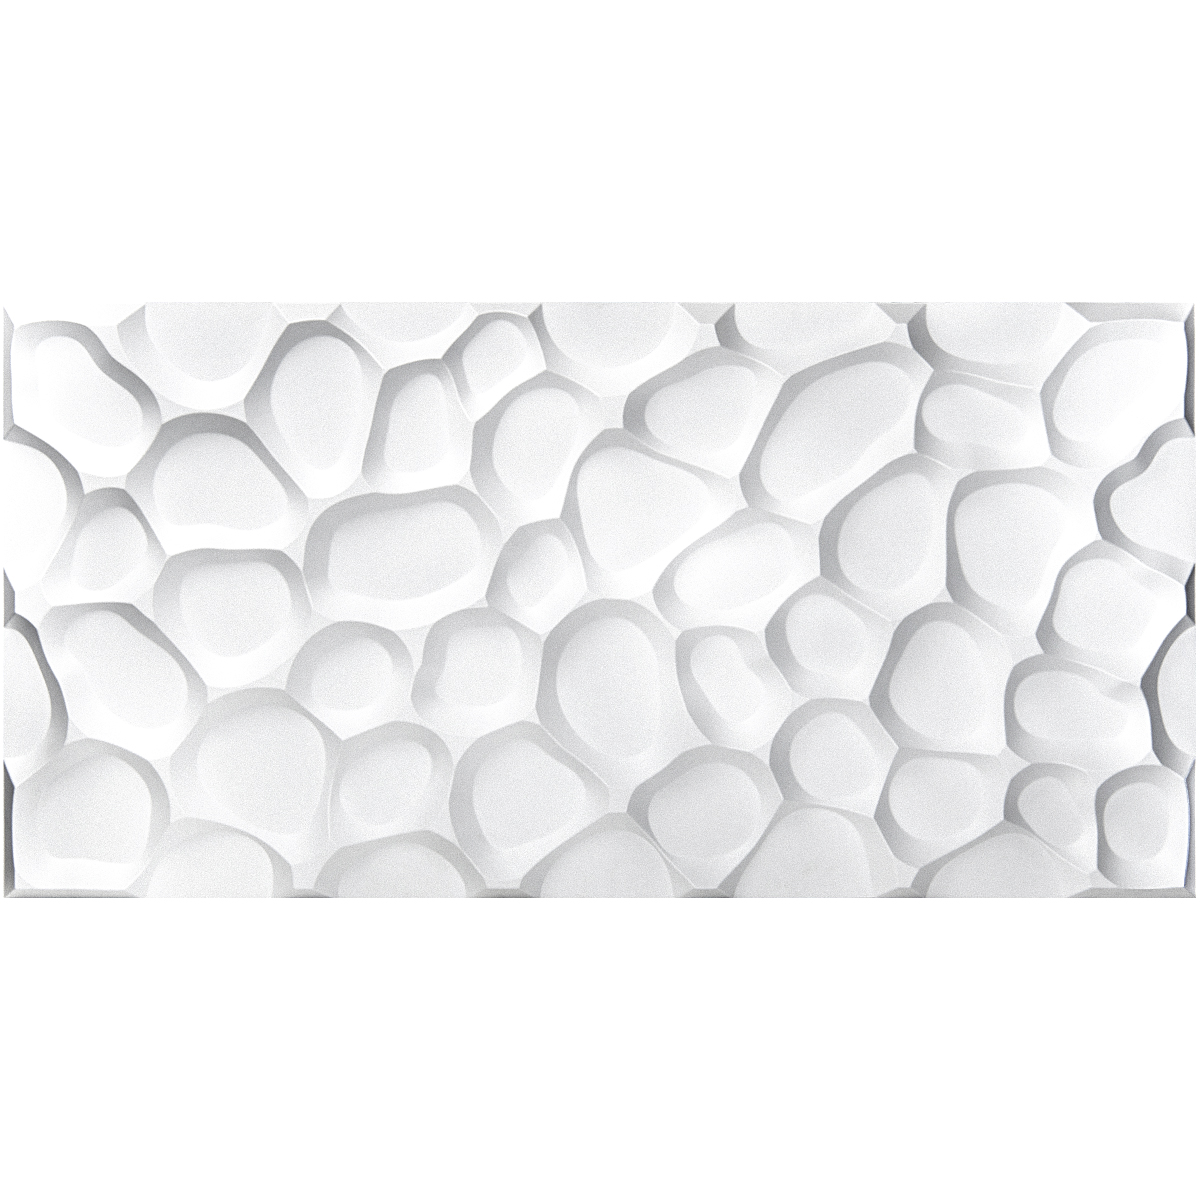 A10038 - Textures 3D Wall Panels White Diamond Wall Design, 12 Tiles 32 SF